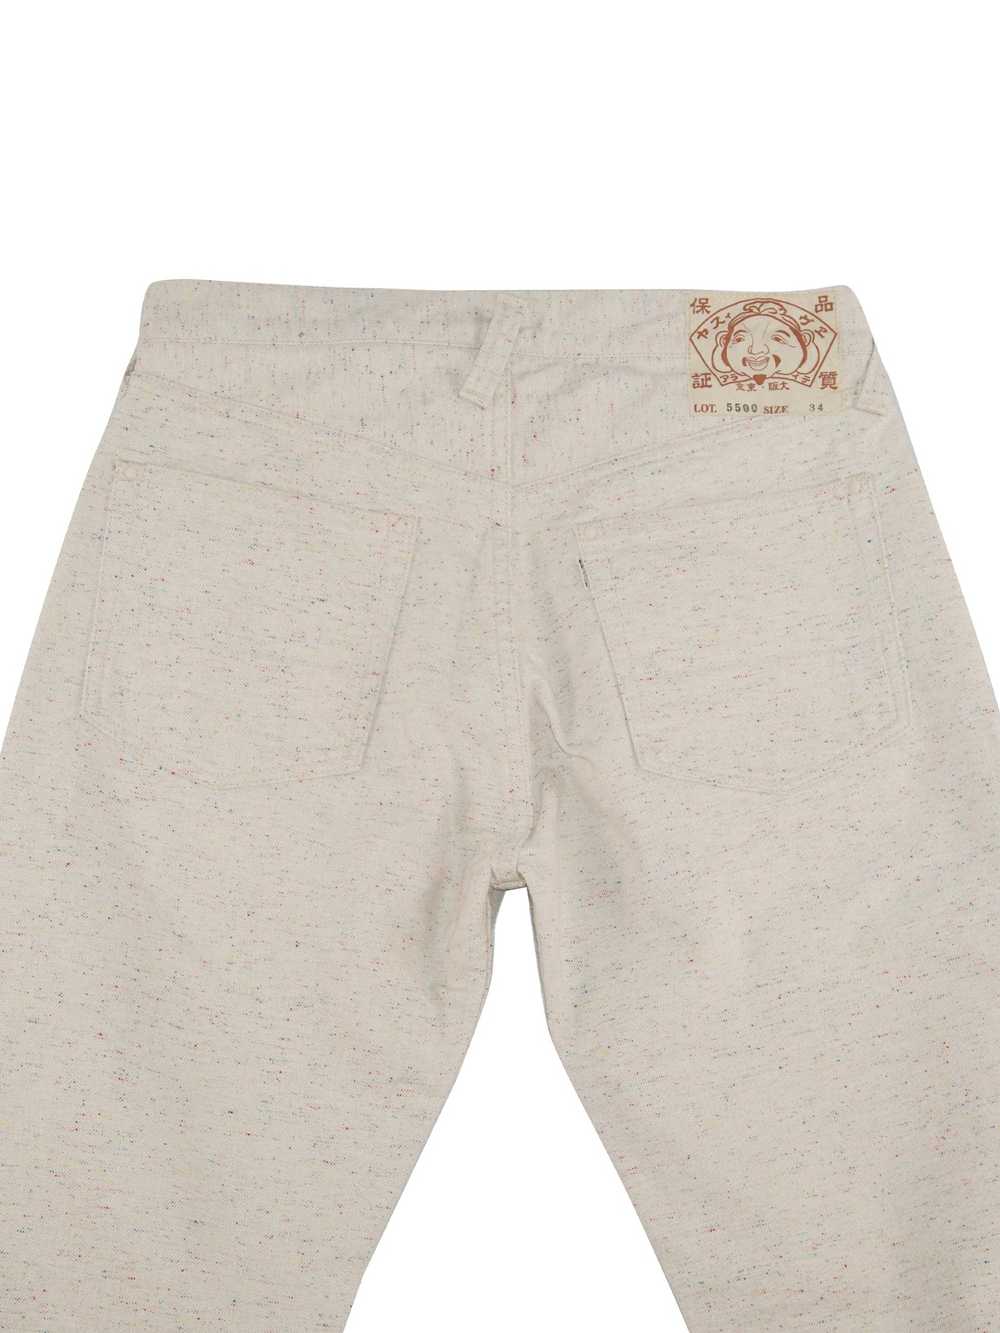 Evisu Multicolor Tweed White Denim Jeans Pants - image 2